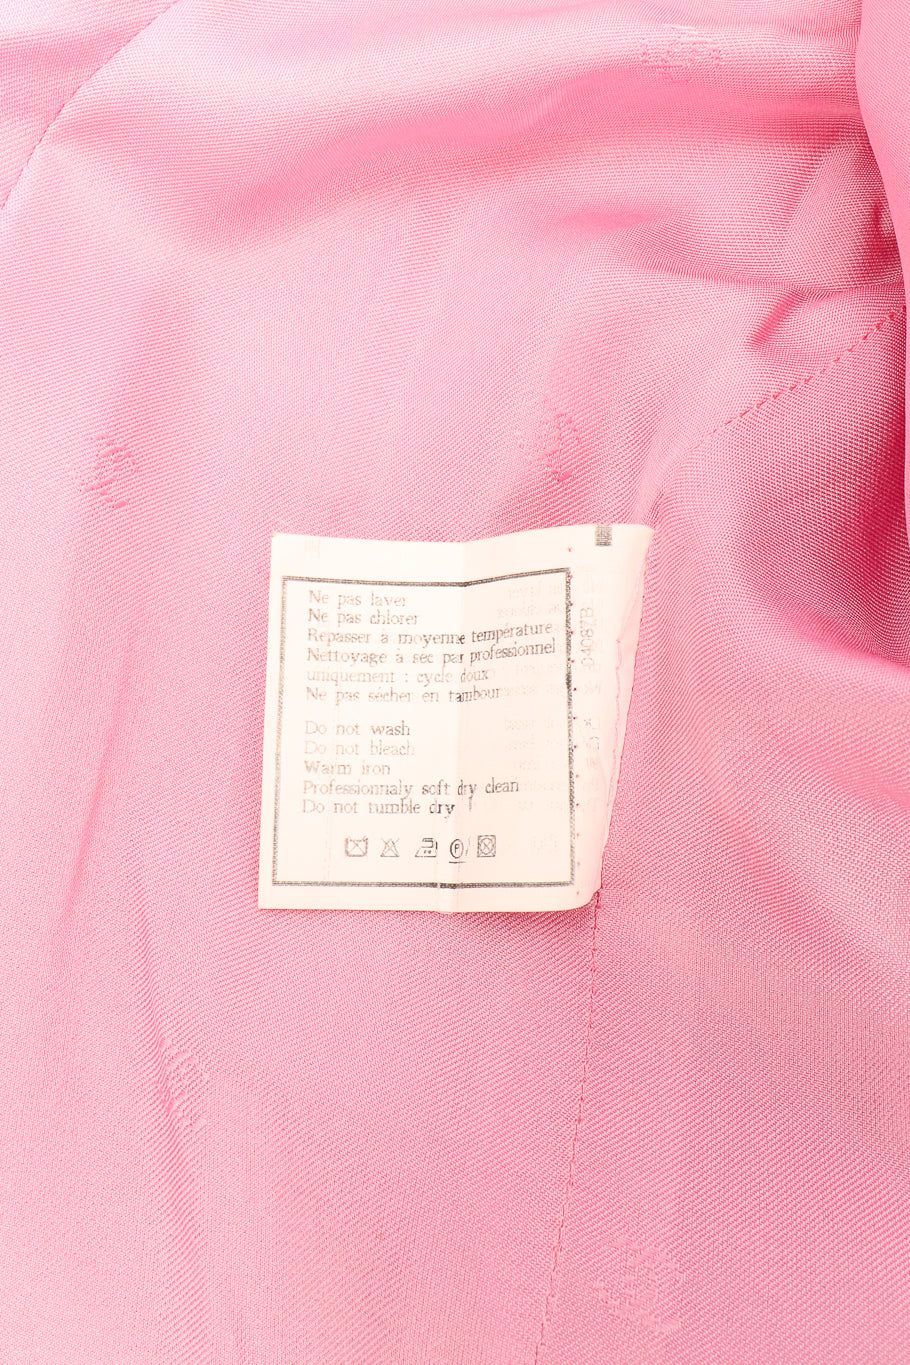 Bouclé knit longline jacket by Chanel fabric tag close  @recessla